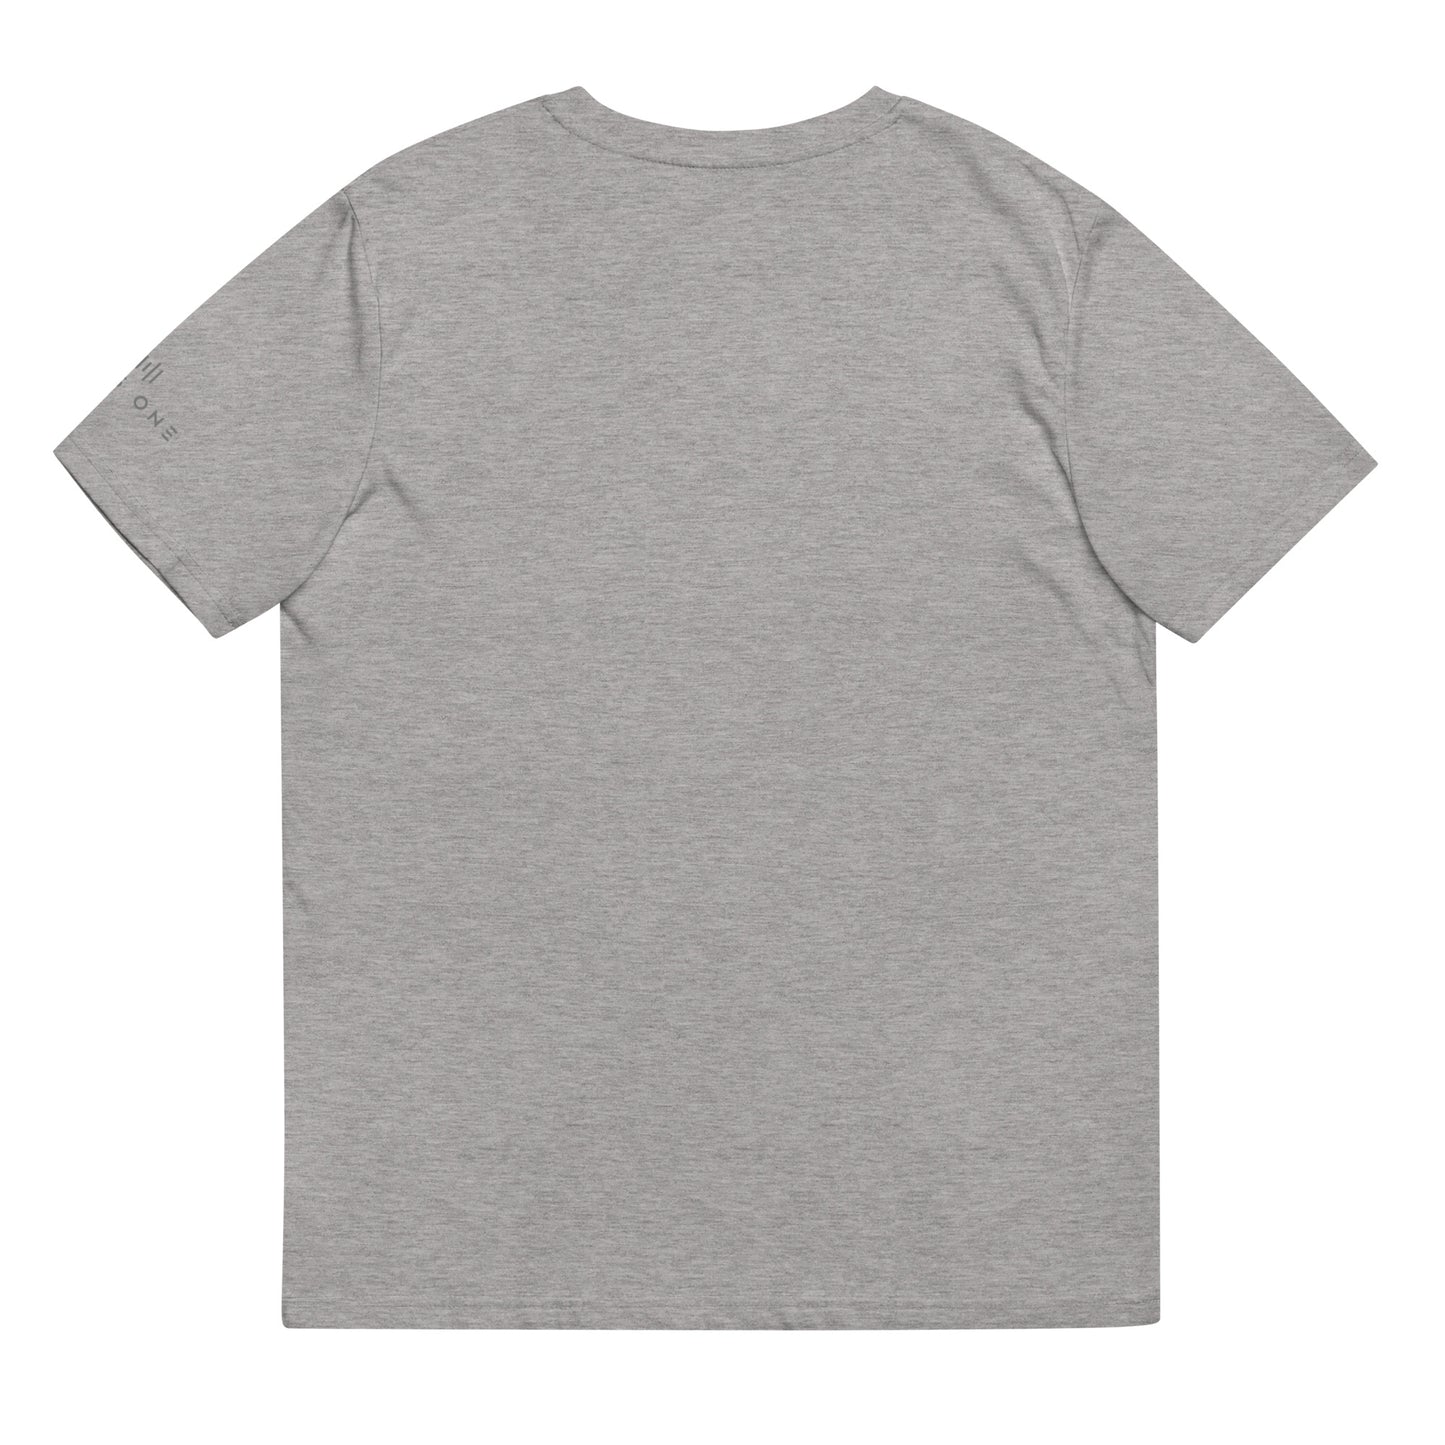 SK8 (v4) Unisex organic cotton t-shirt